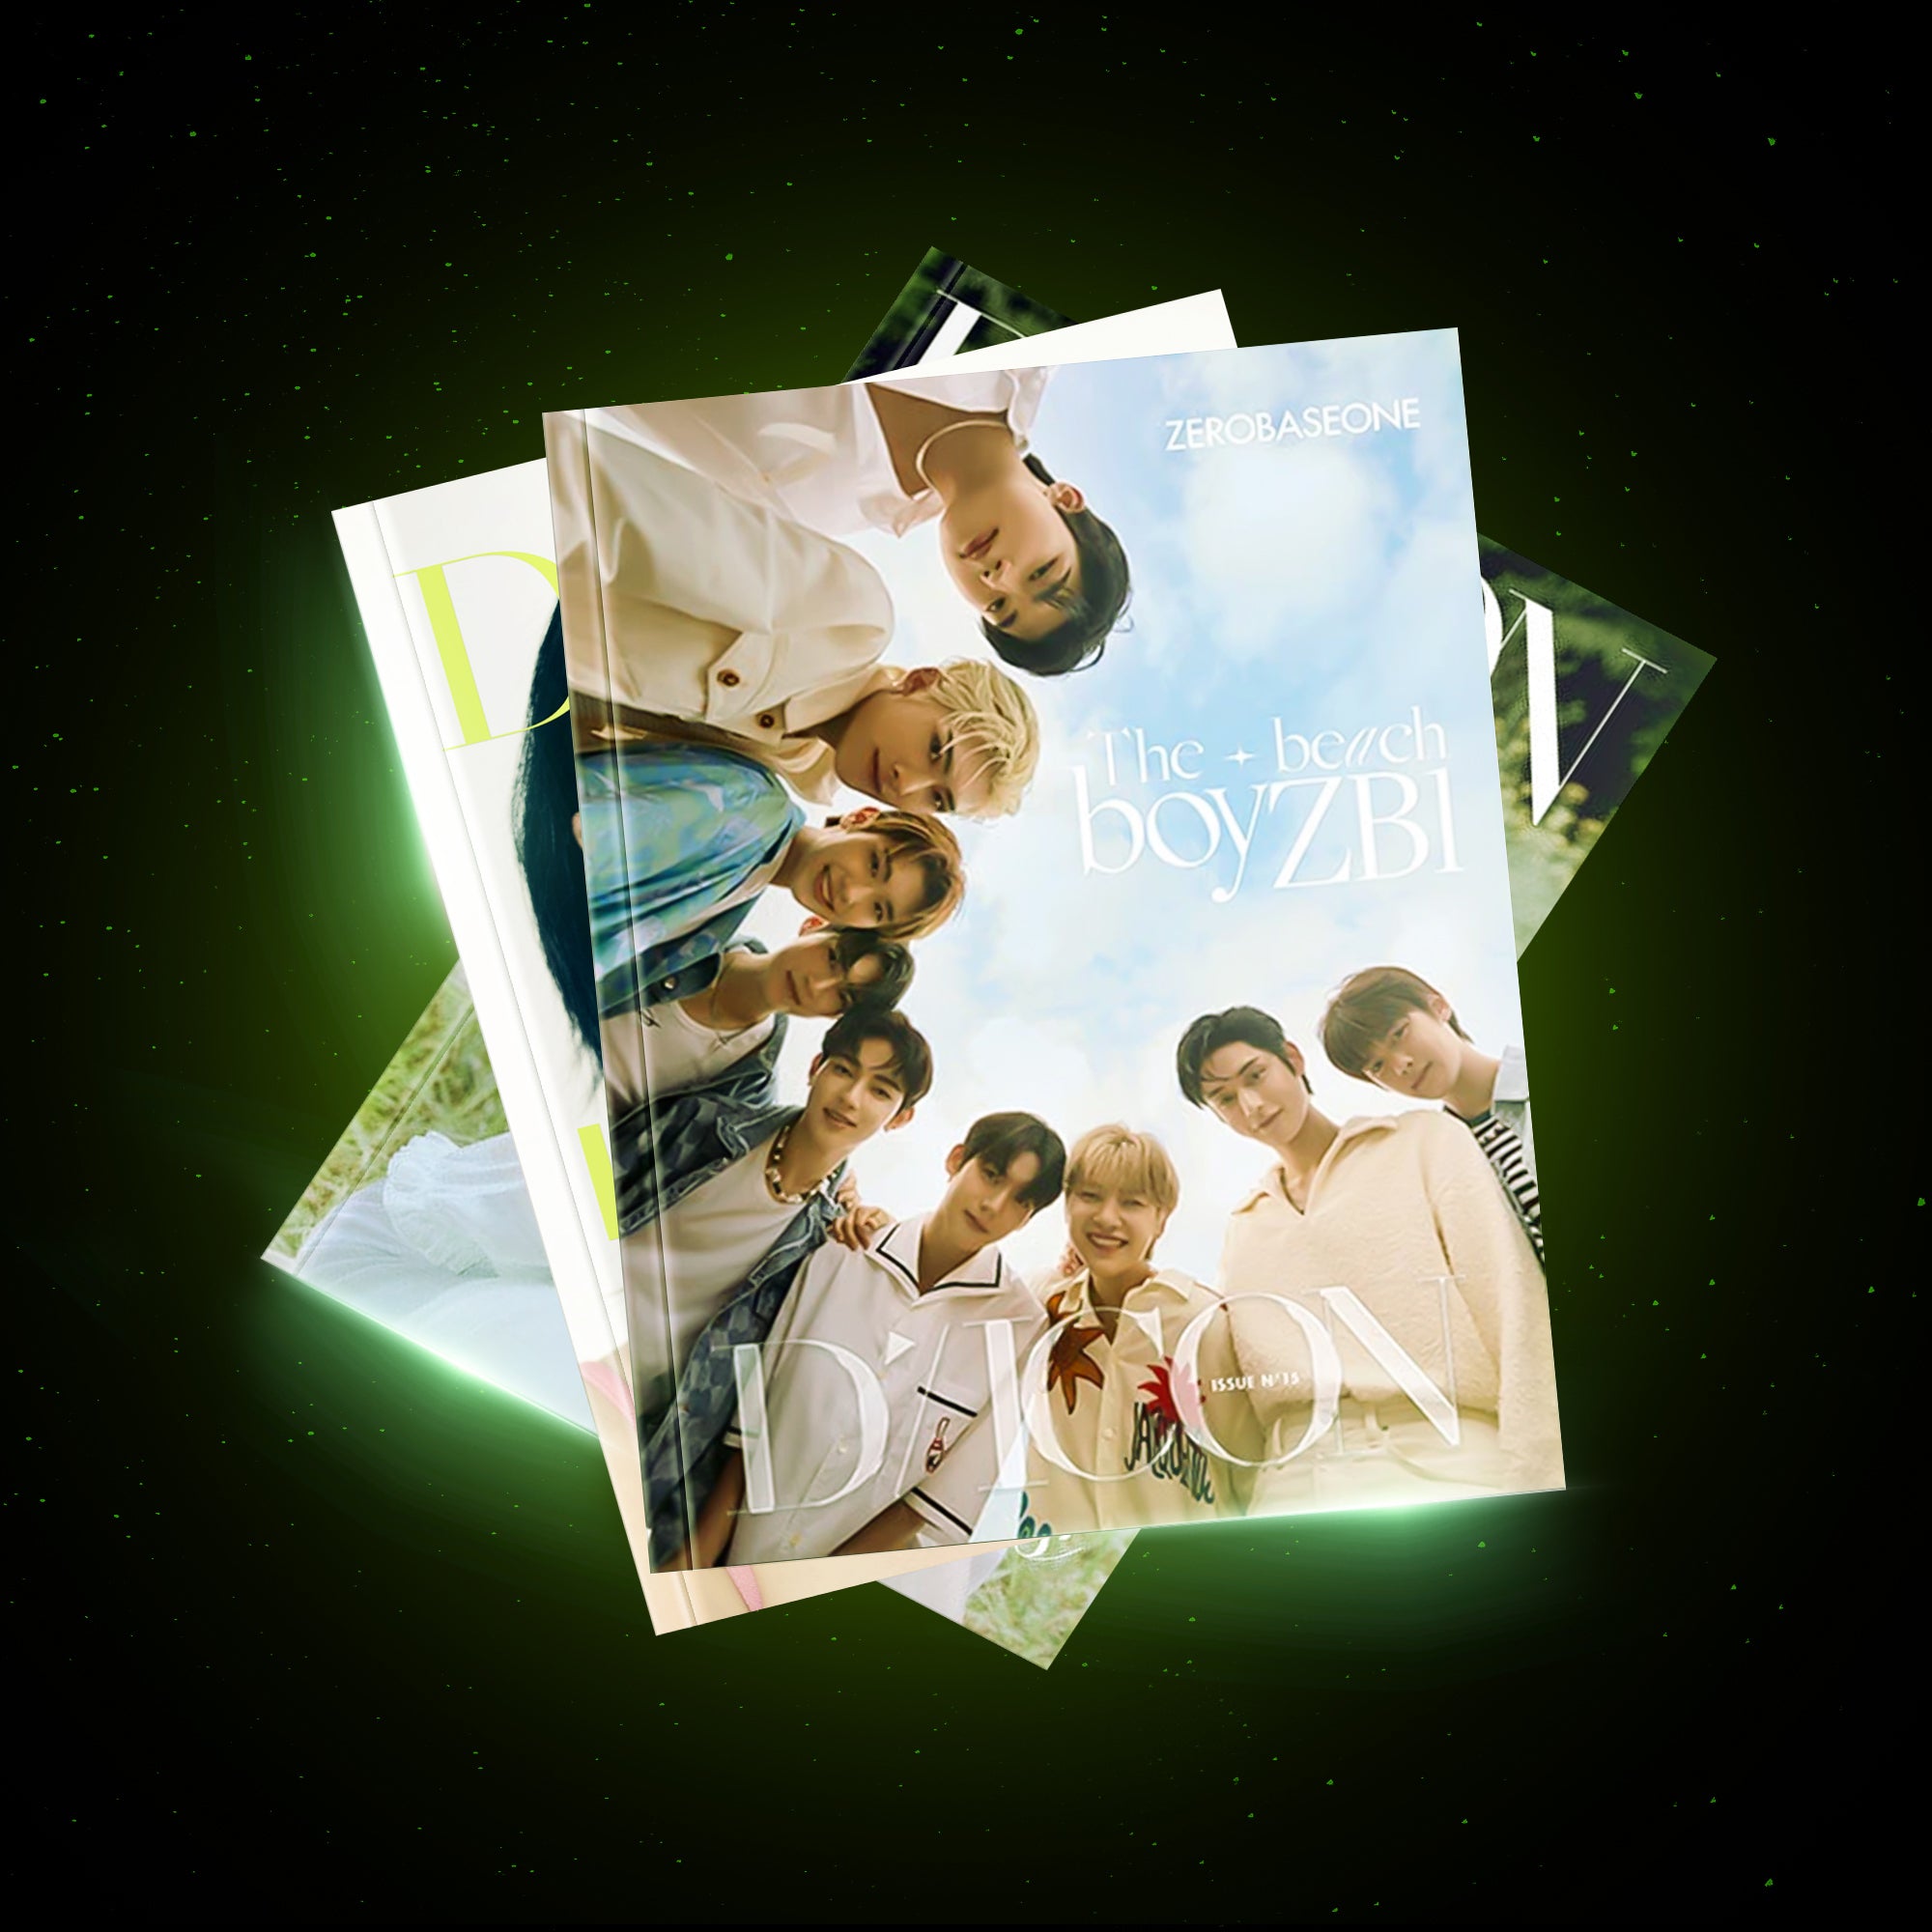 [Set] Stray Kids ROCK-STAR 8th Mini Album Postcard 8 Ver Set